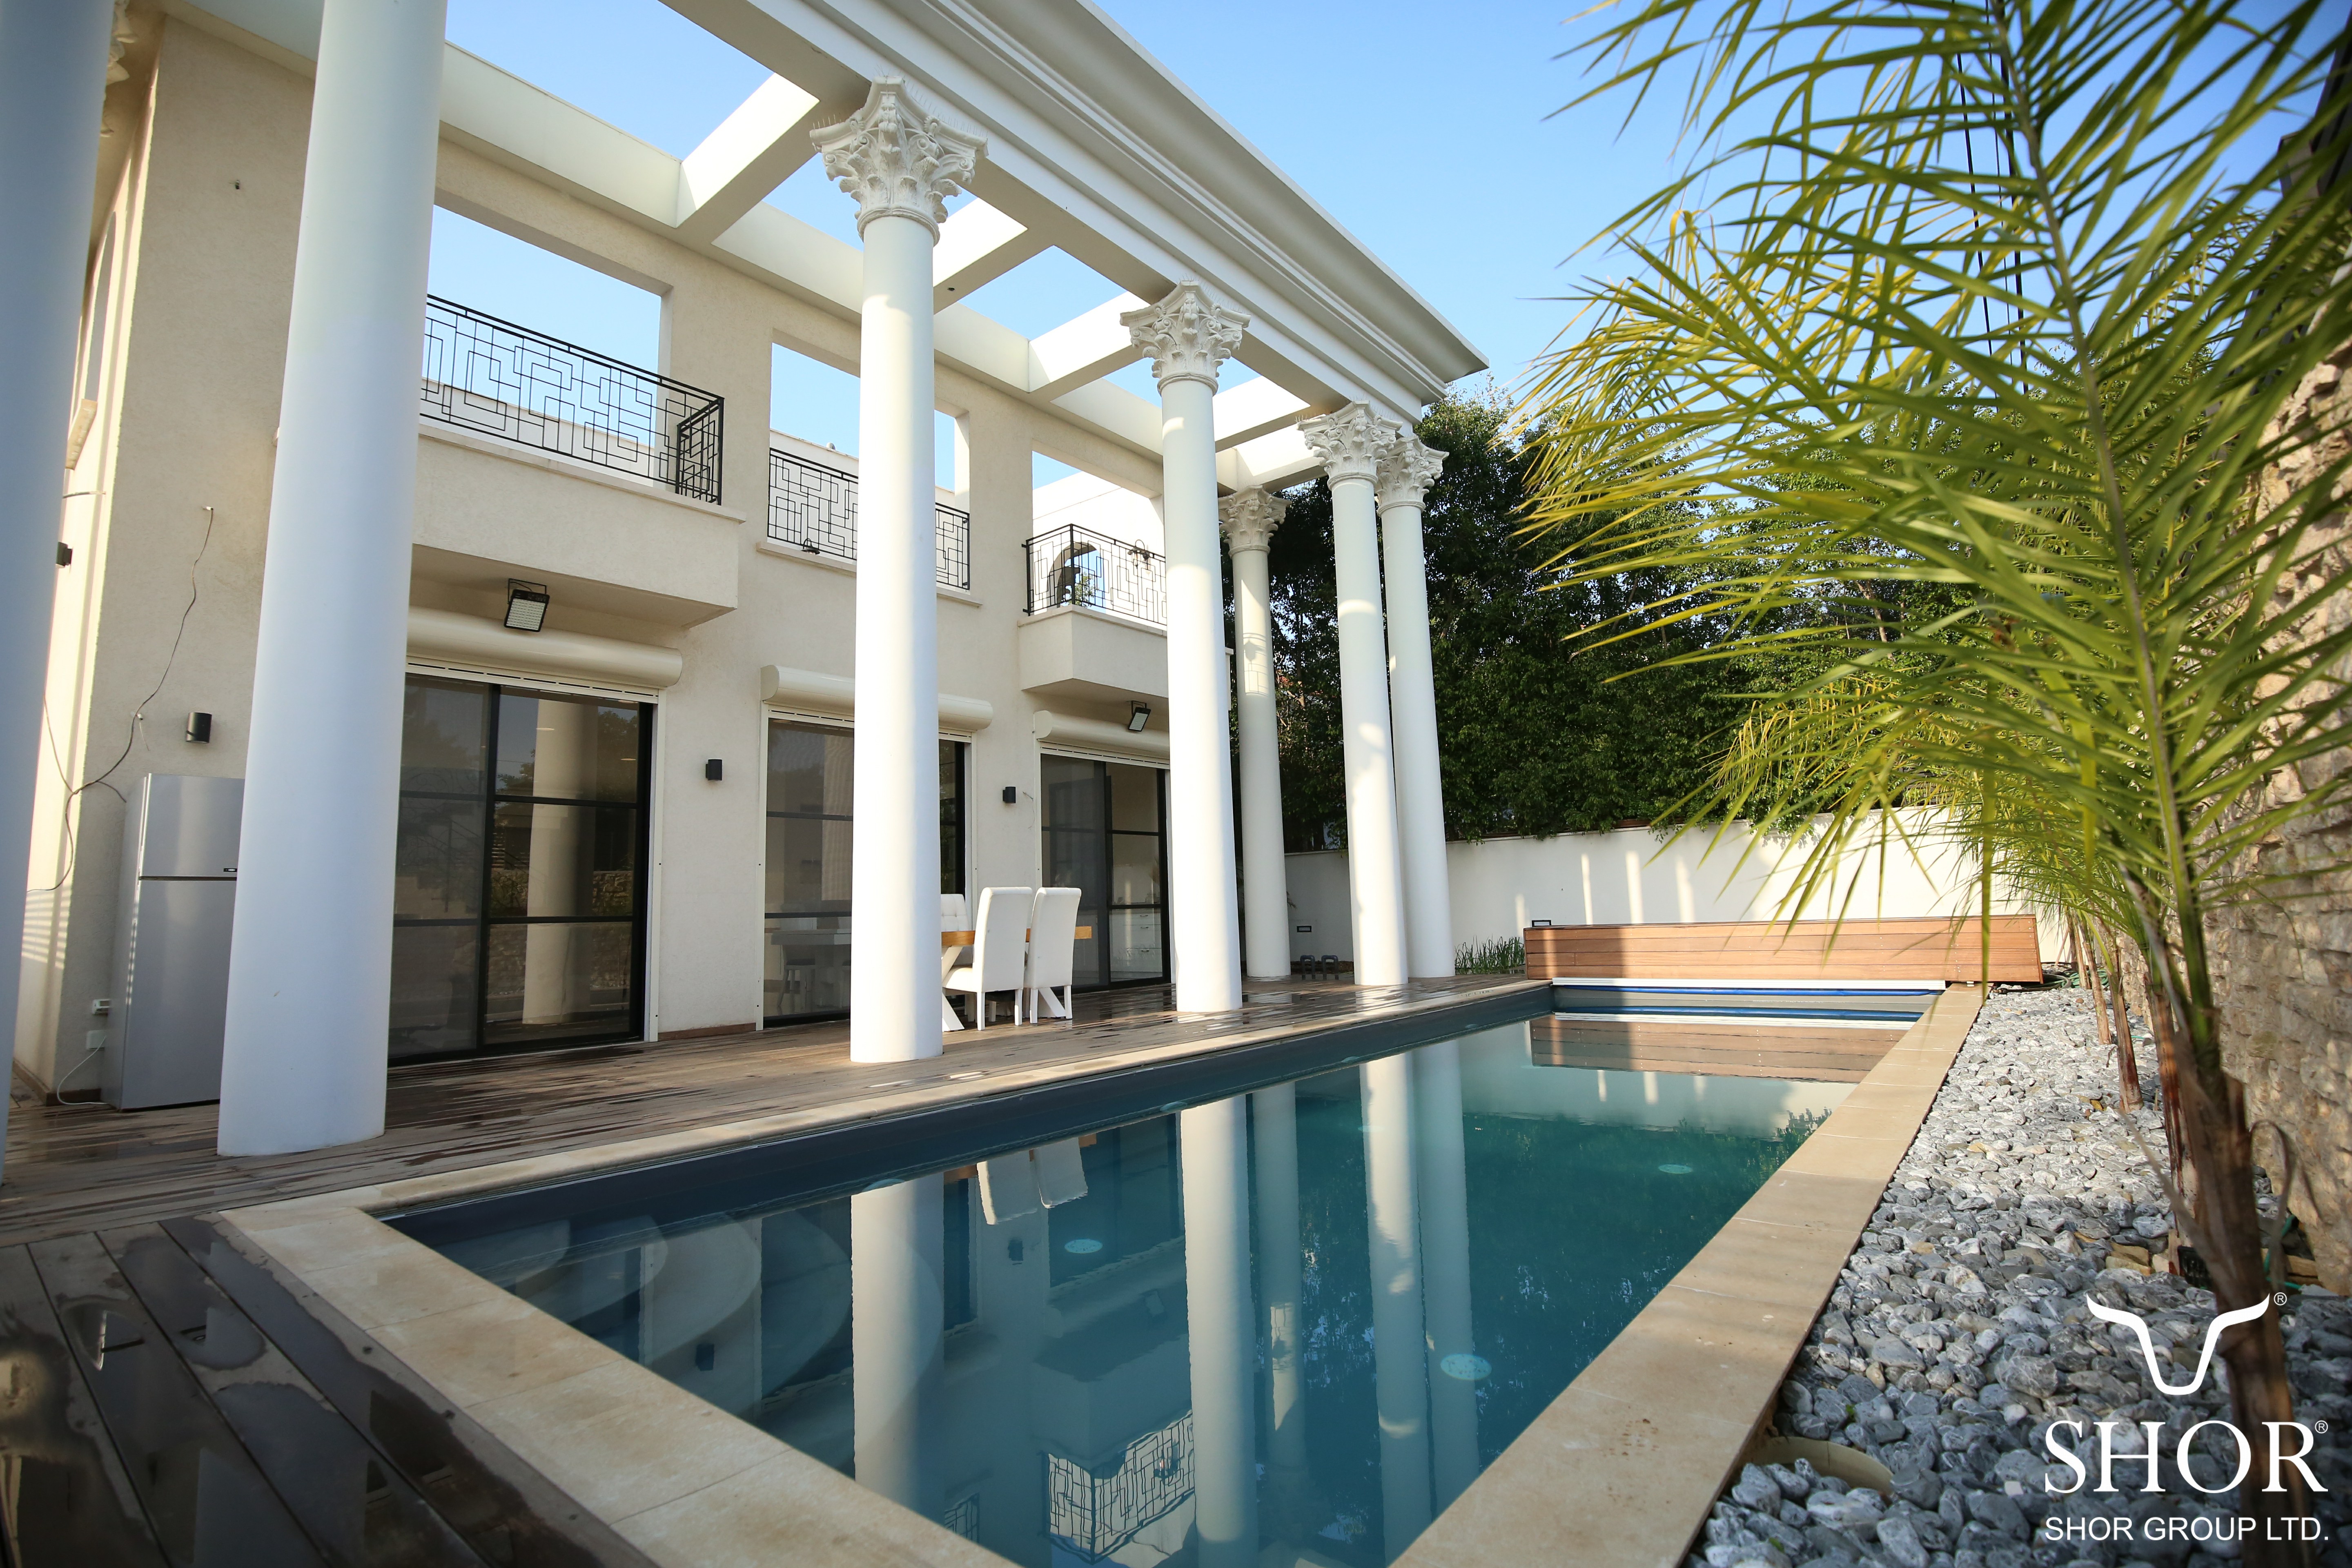 amir-shor-group-real-estate-shorealty-luxury-home-for-sale-afula-israel-2